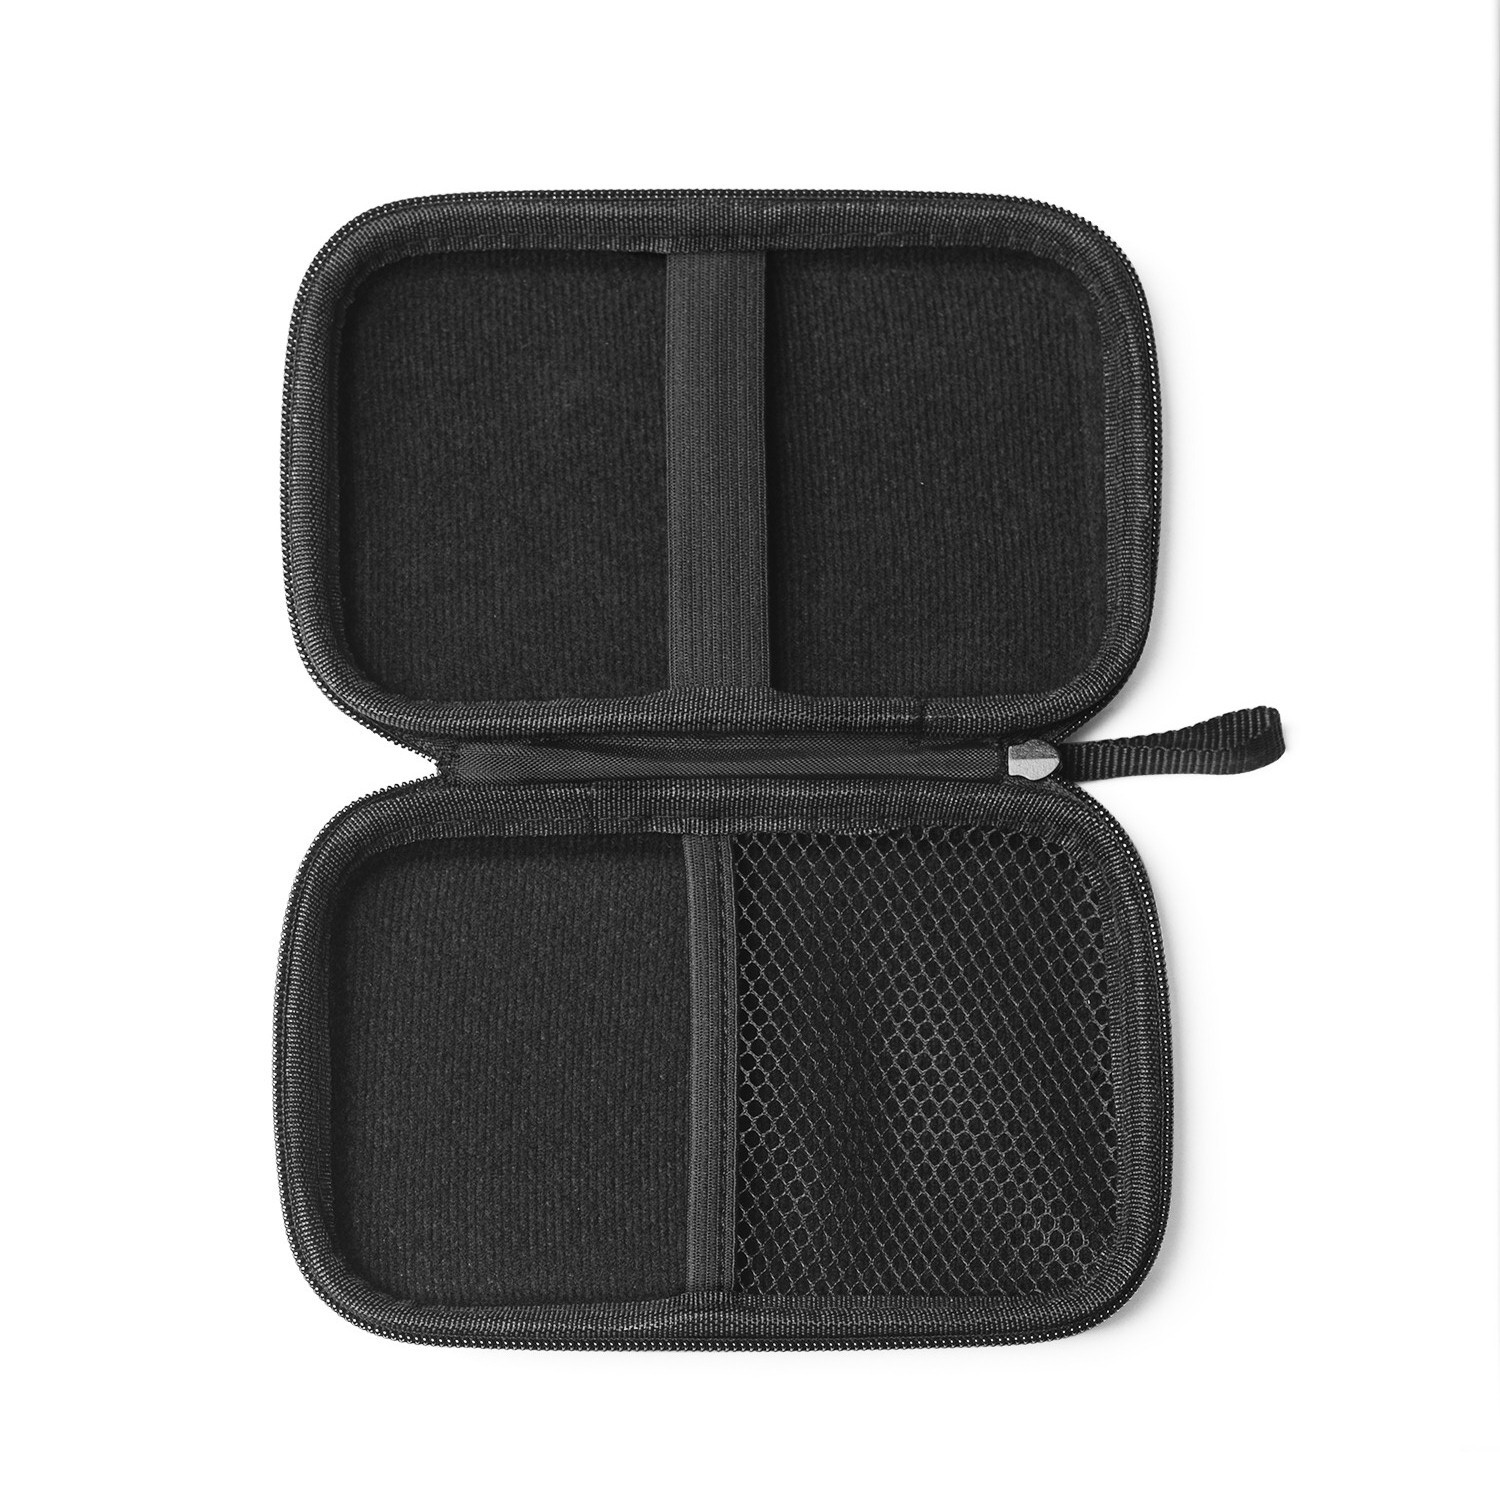 Portable-Protection-Bag-Storage-Case-for-FiiO-Q5-M7-HIFI-DSD-Amplifier-1759409-3